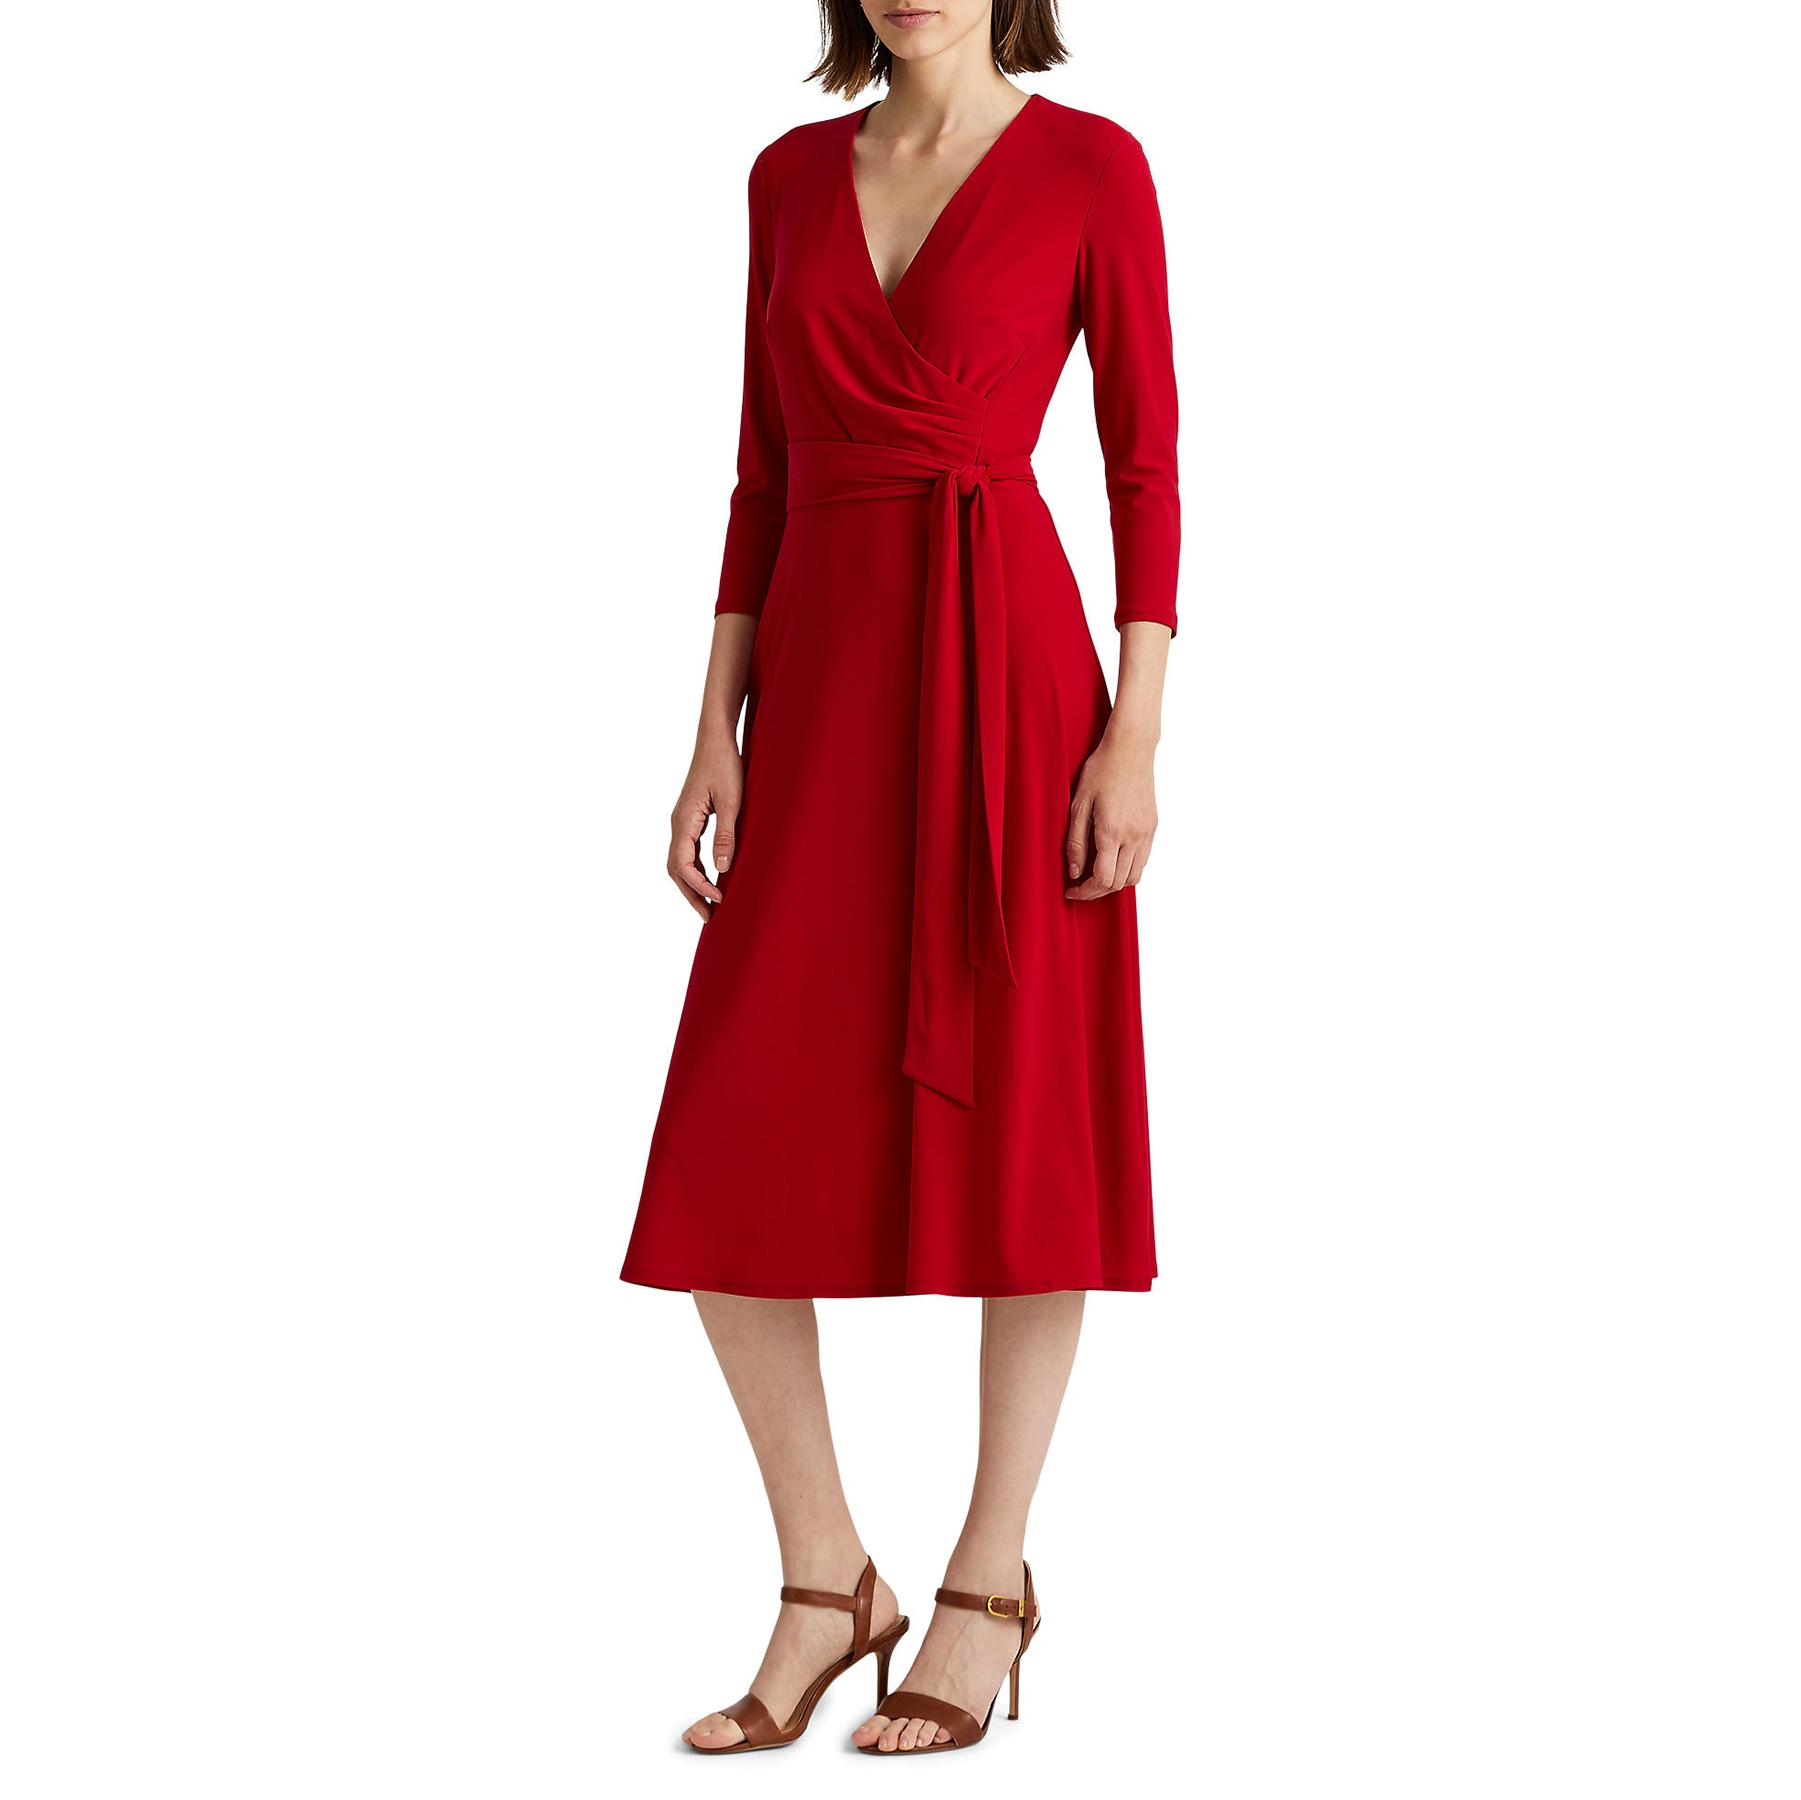 Lauren by Ralph Lauren Carlyna Surplice Jersey Dress in Red | Lyst UK